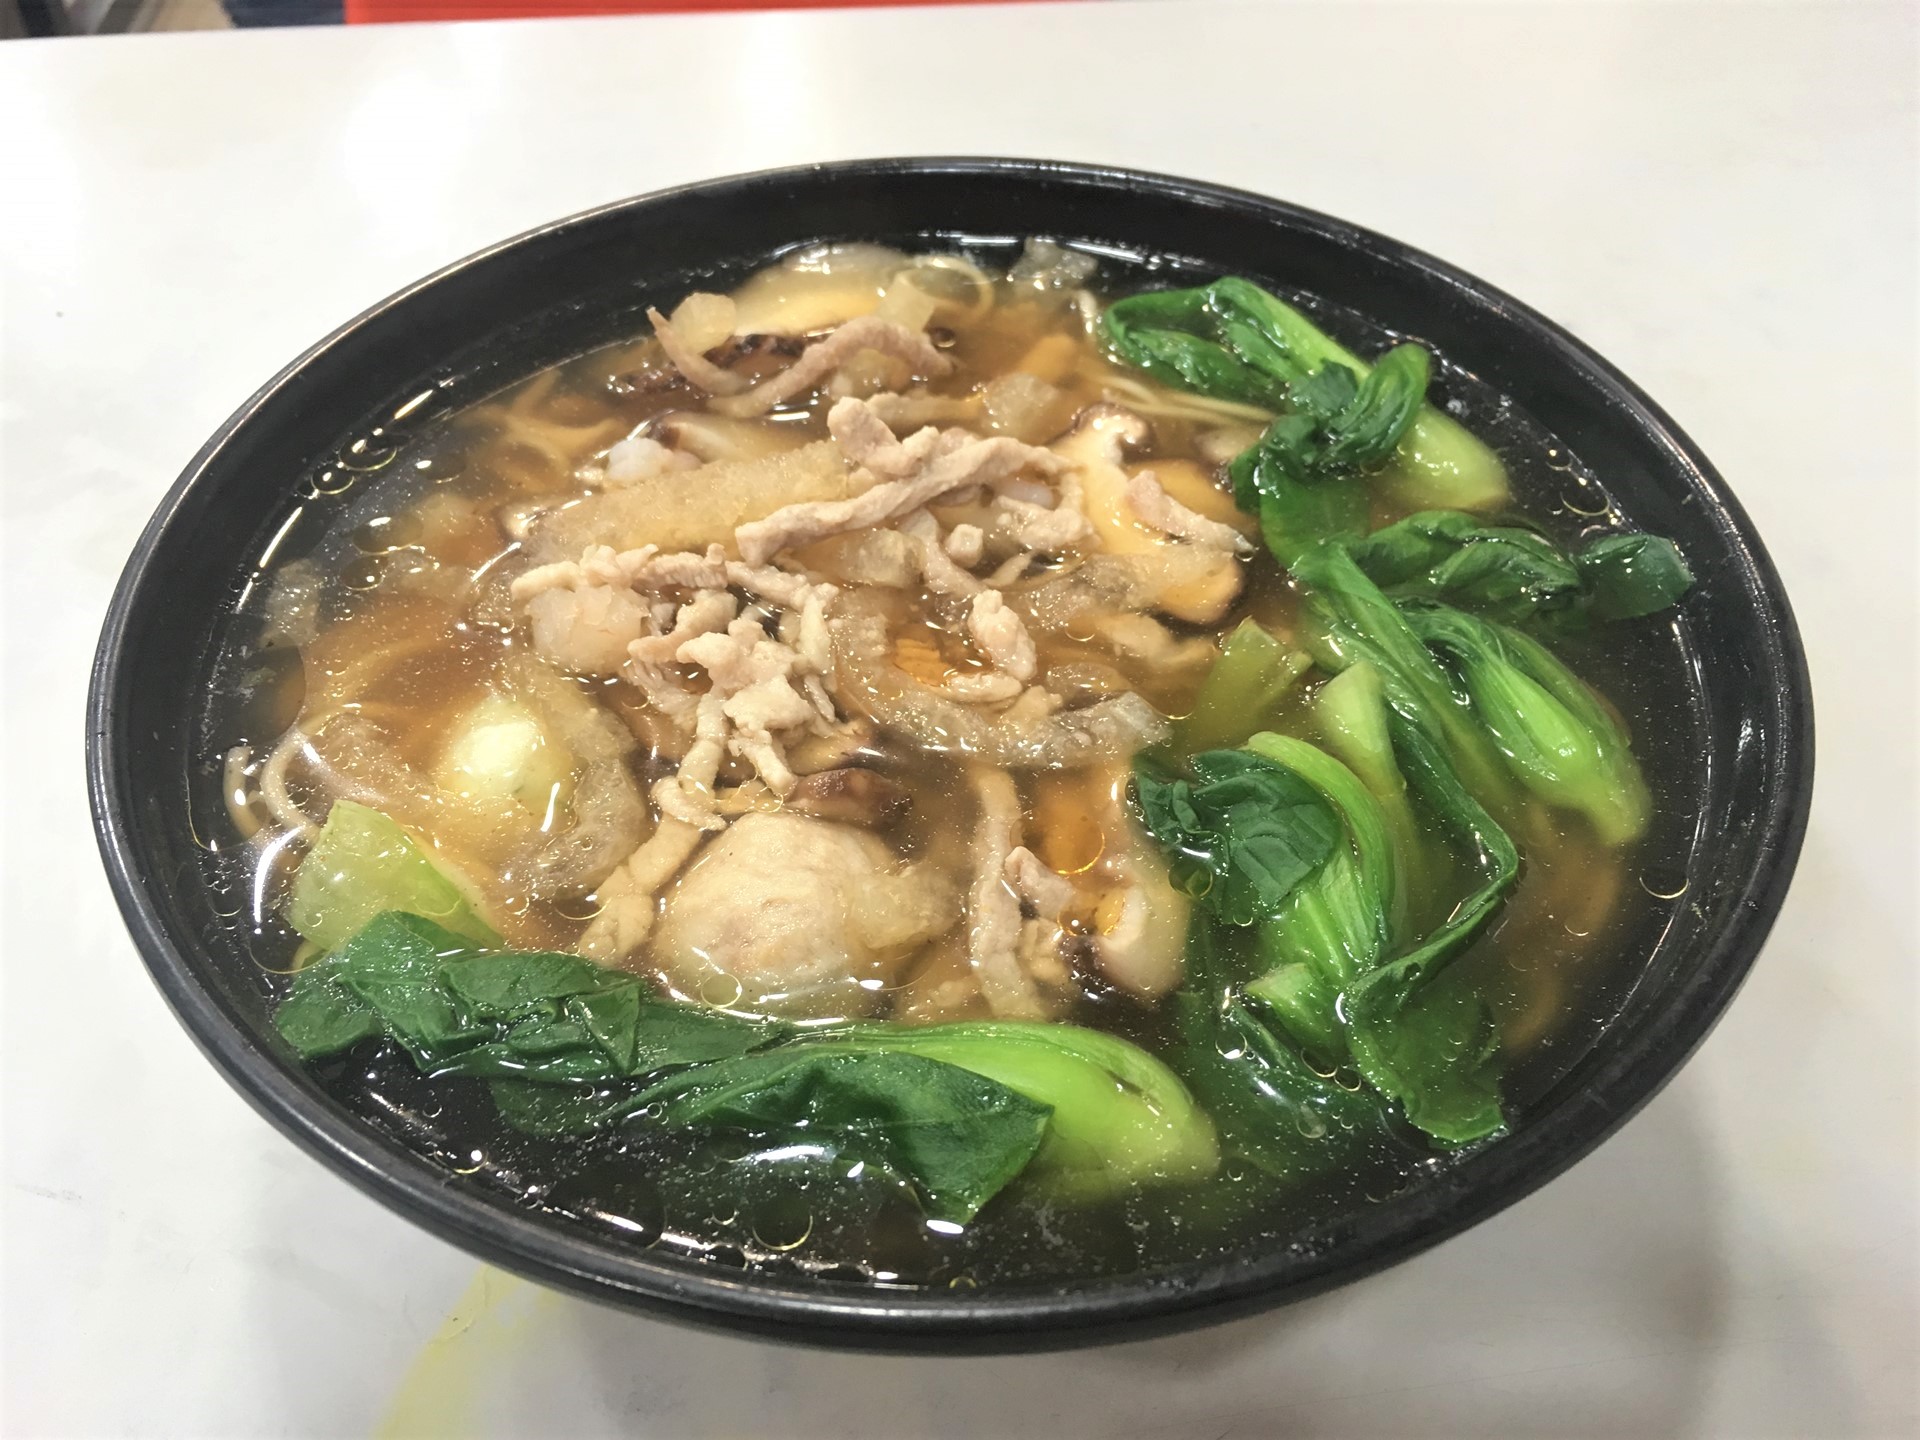 上海小吃の三鮮肉糸湯麺35元